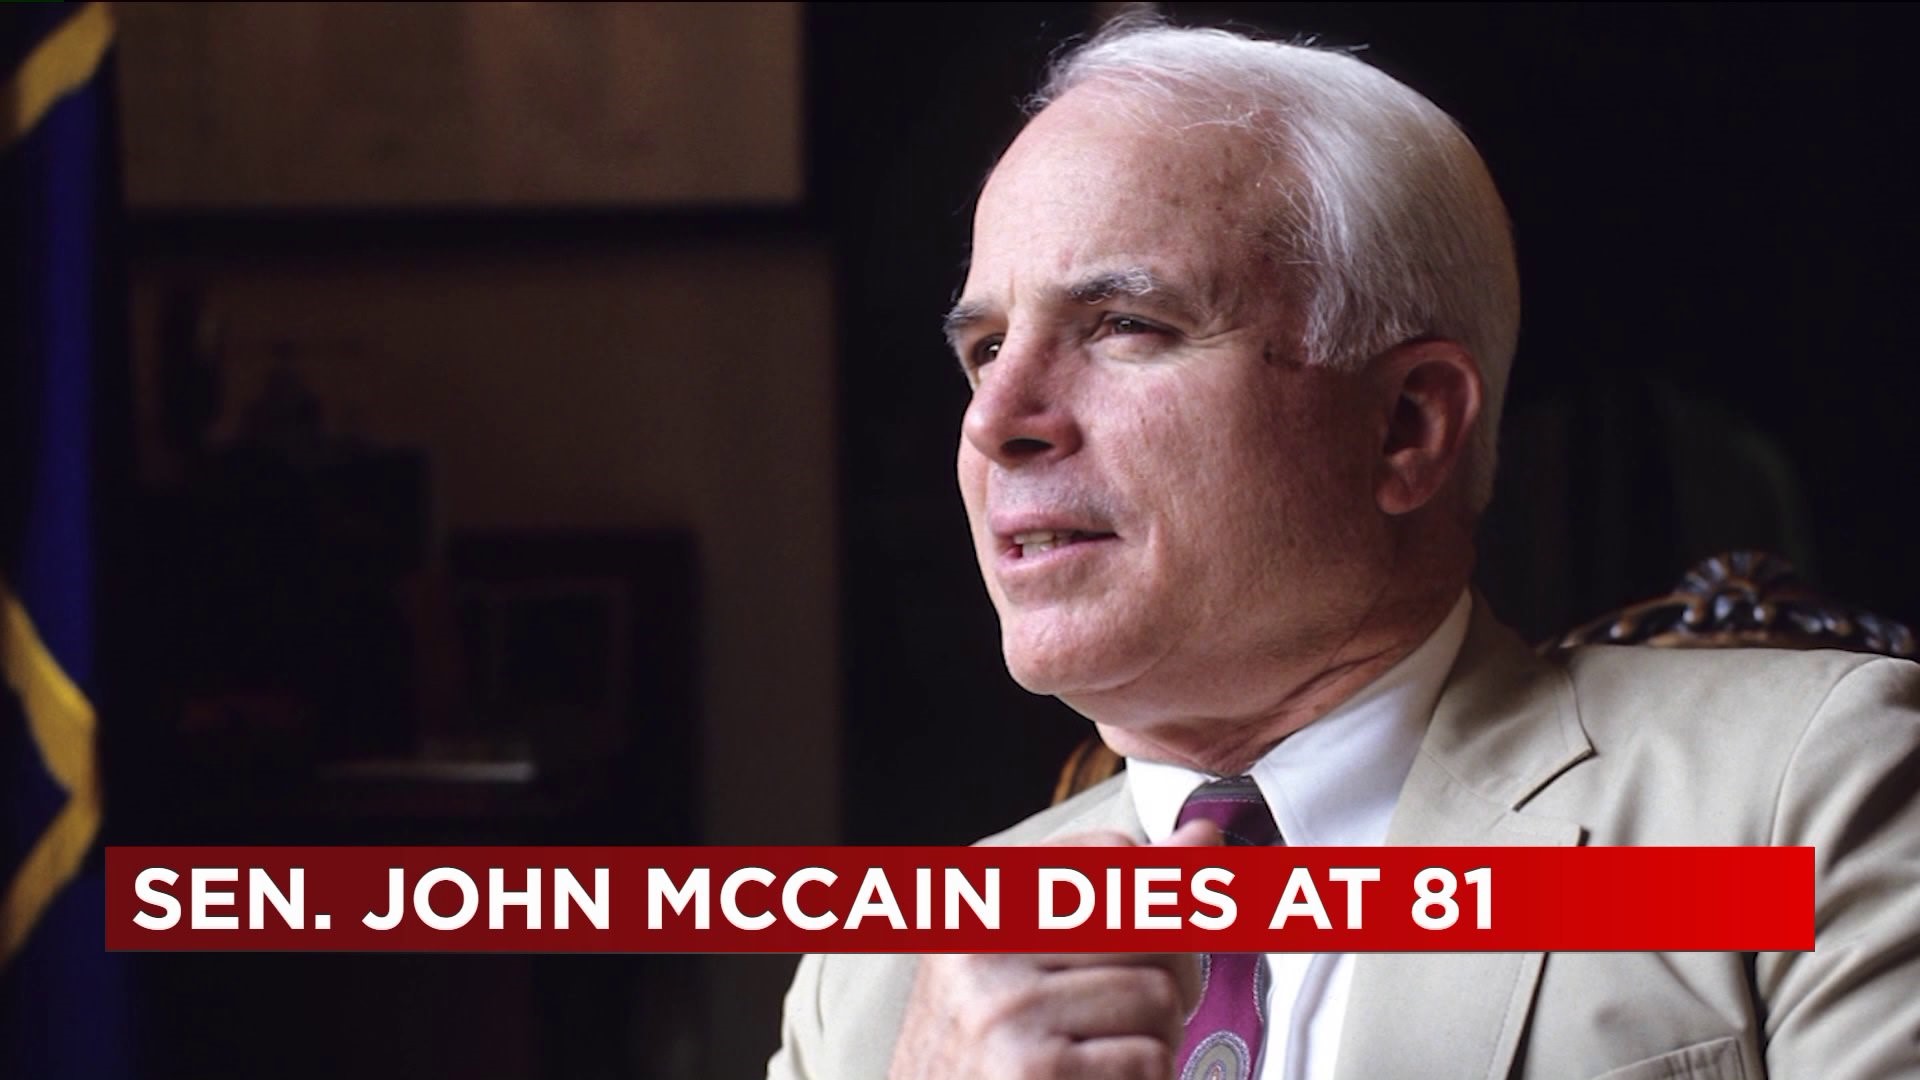 John McCain dies at 81